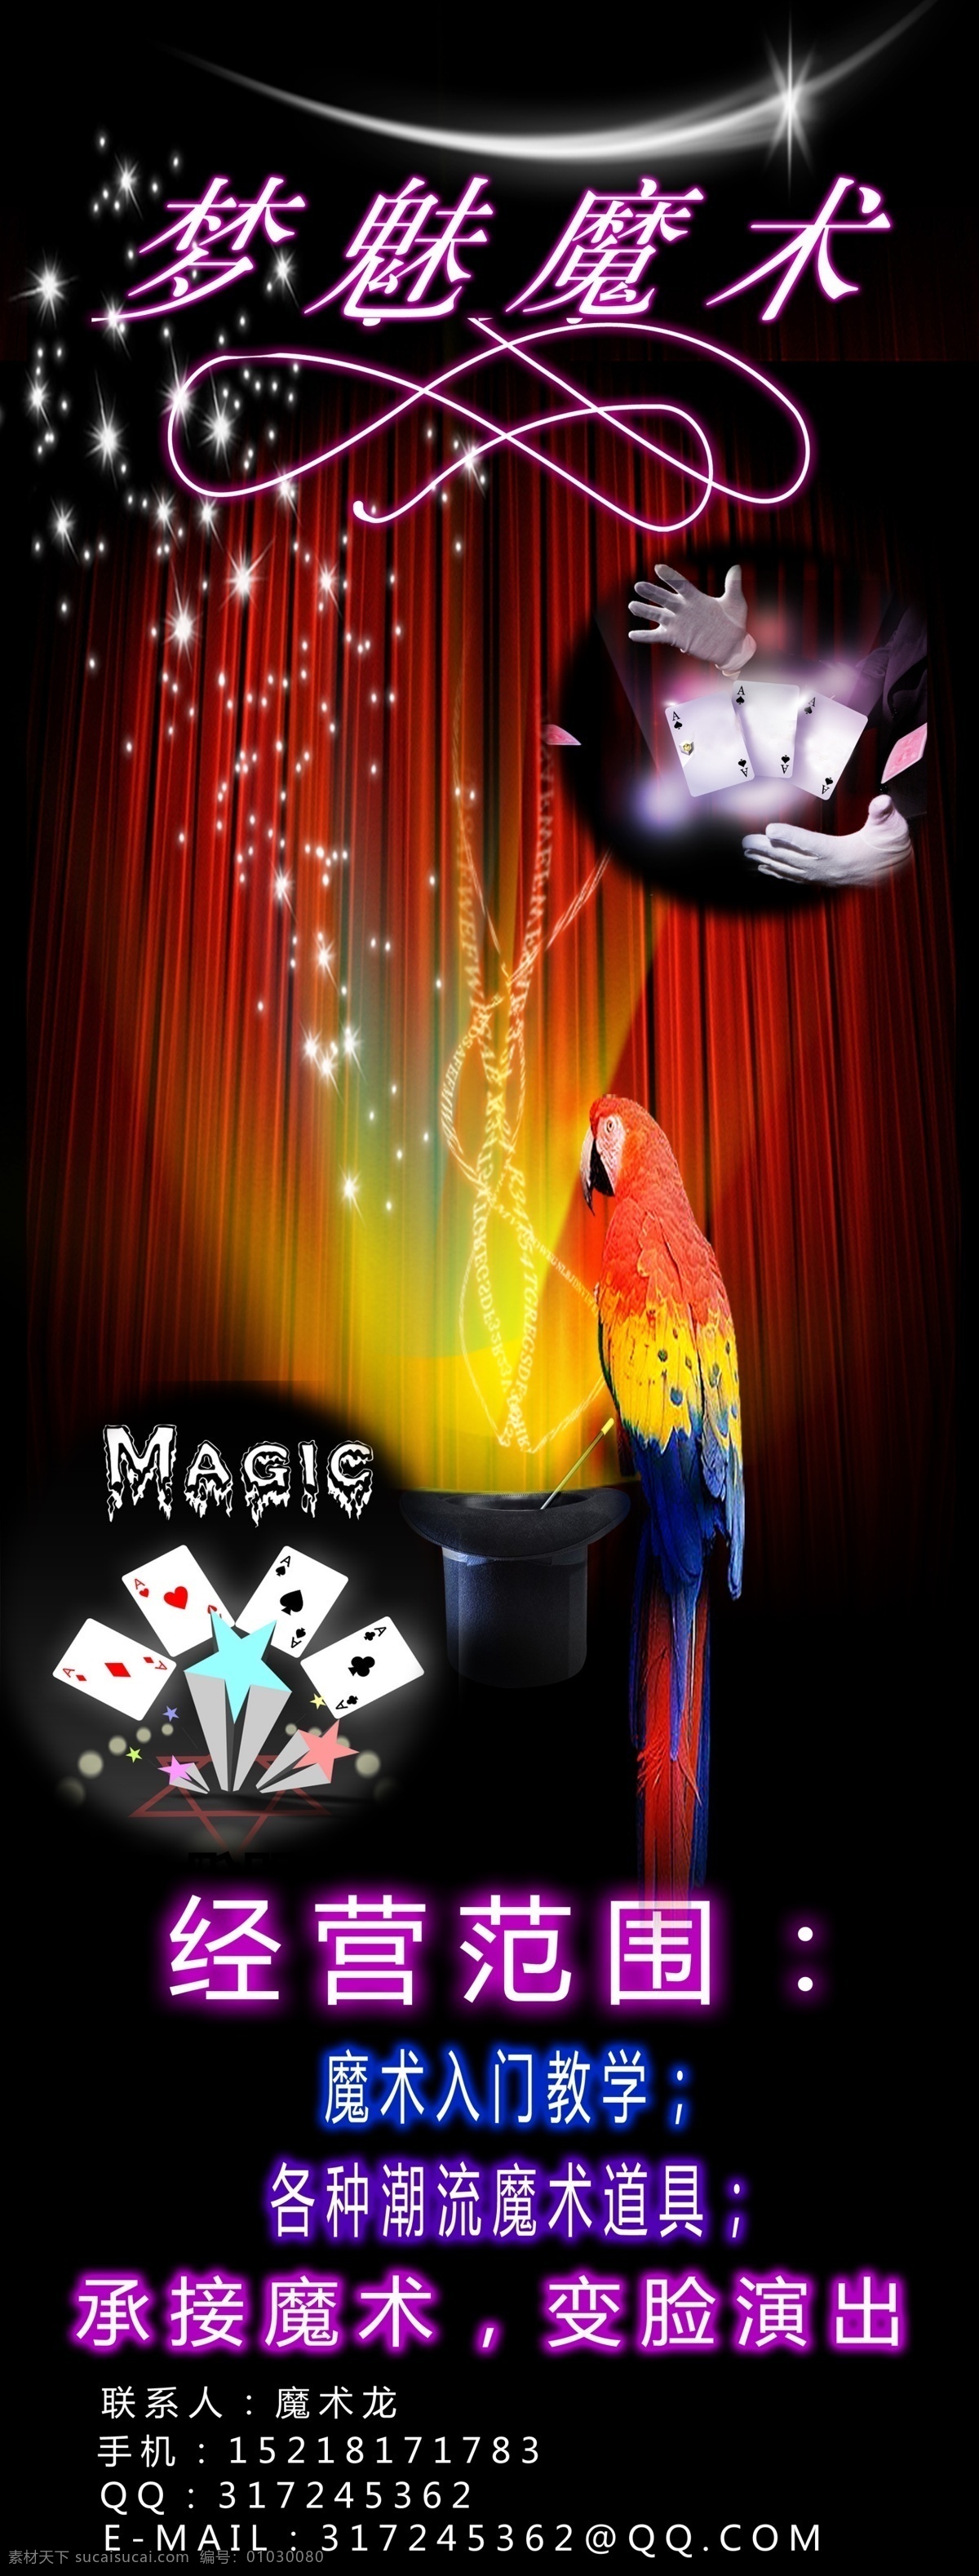 x展架 灯光 分层 广告设计模板 魔术帽 魔术师 扑克 舞台 梦 魅 魔术 x 展架 模板下载 梦魅魔术 梦魅 梦幻魔术 星光 魔术牌 魔术手 鹦鹉 夜空 展板模板 源文件 x展板设计